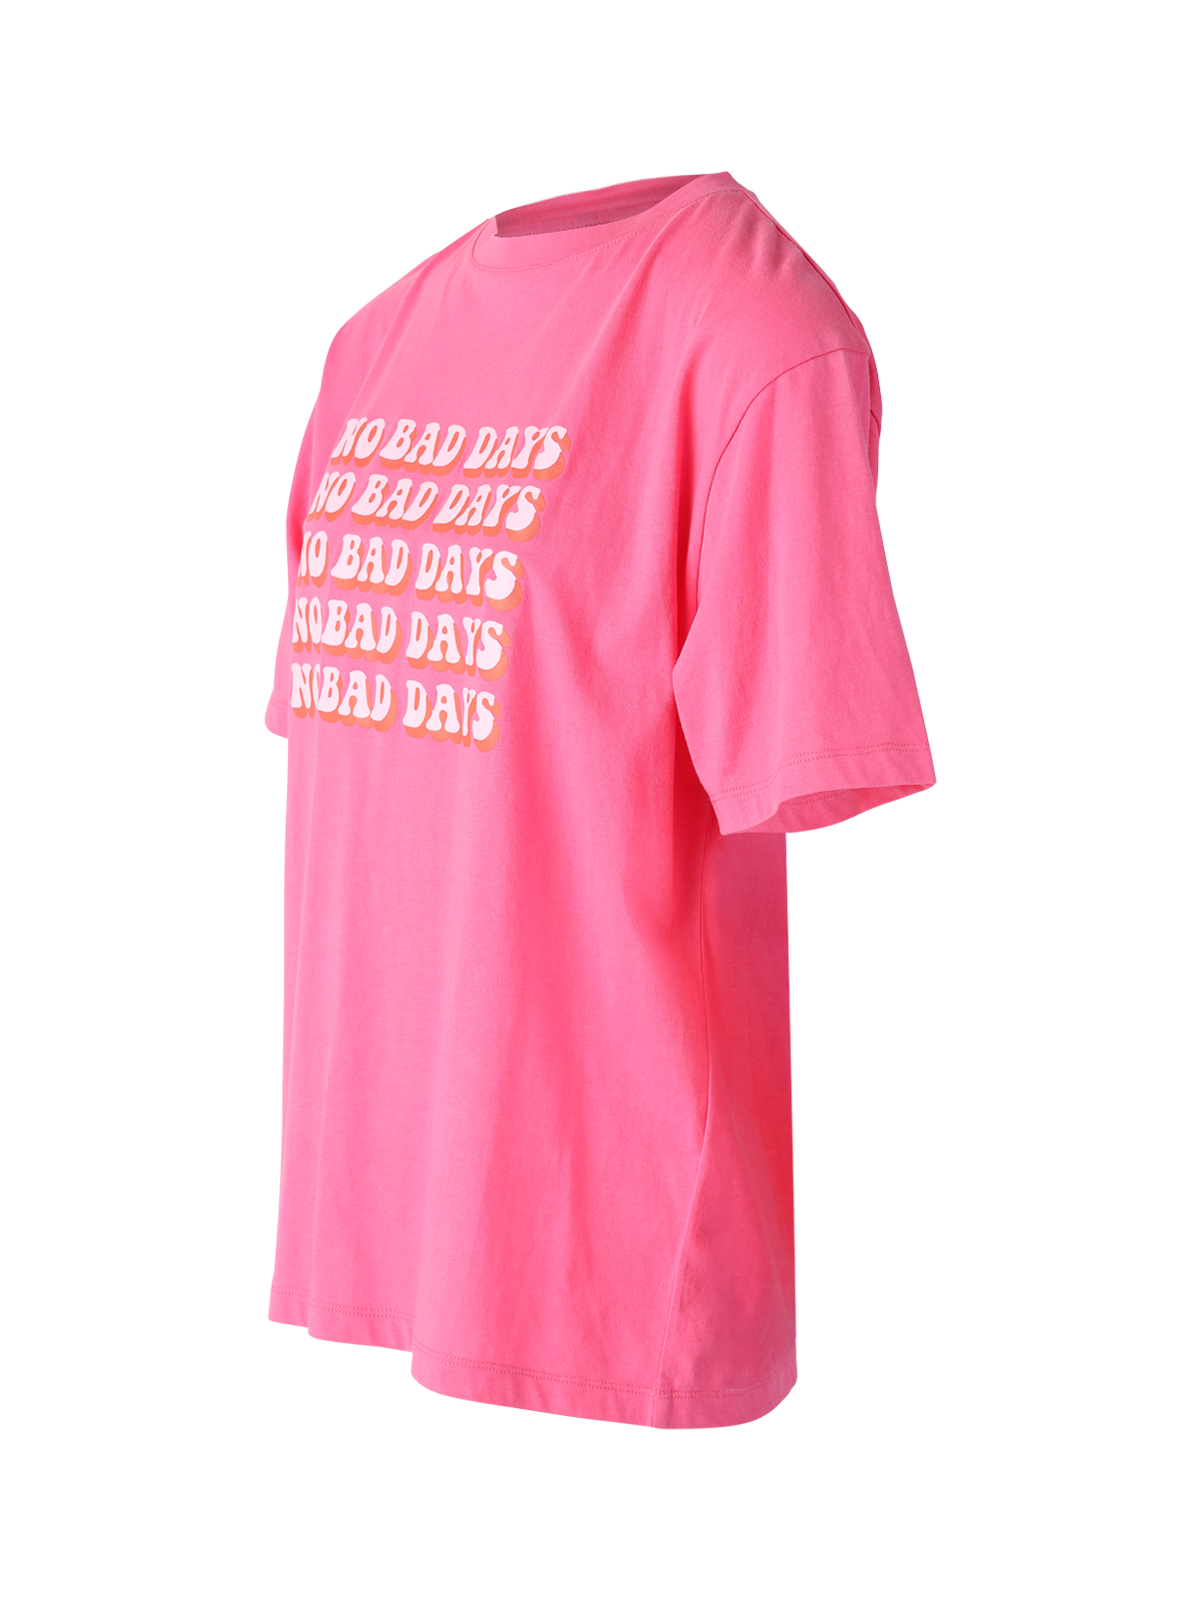 Imani-R Women T-Shirt | Pink